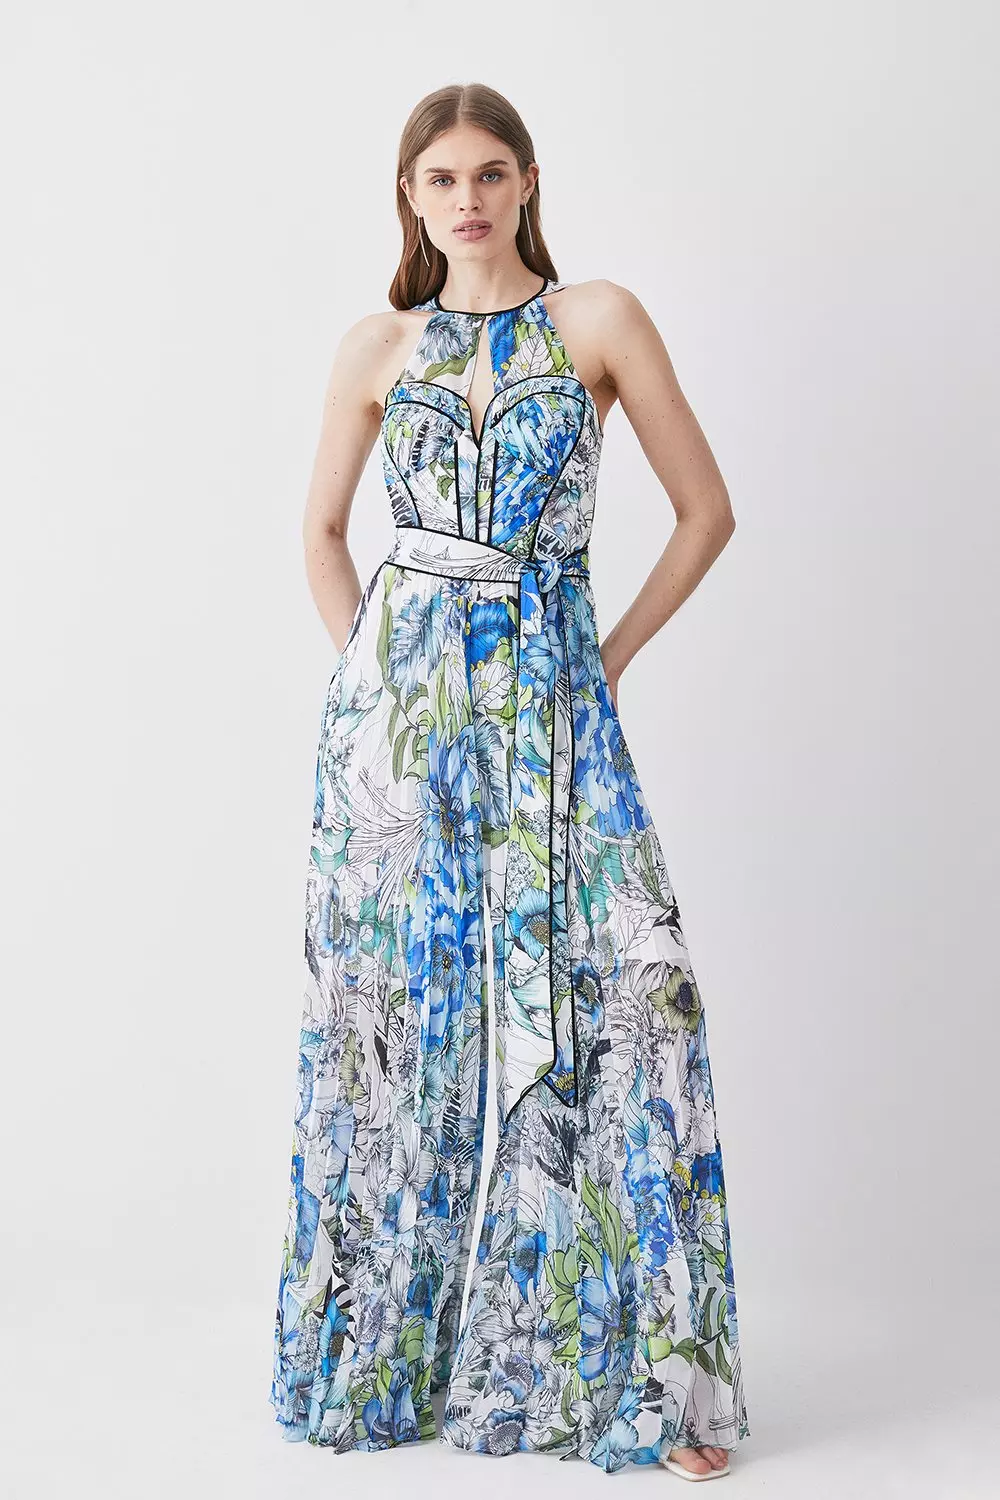 KAREN MILLEN Tall Corset Detail Floral Pleated Dress in Multi